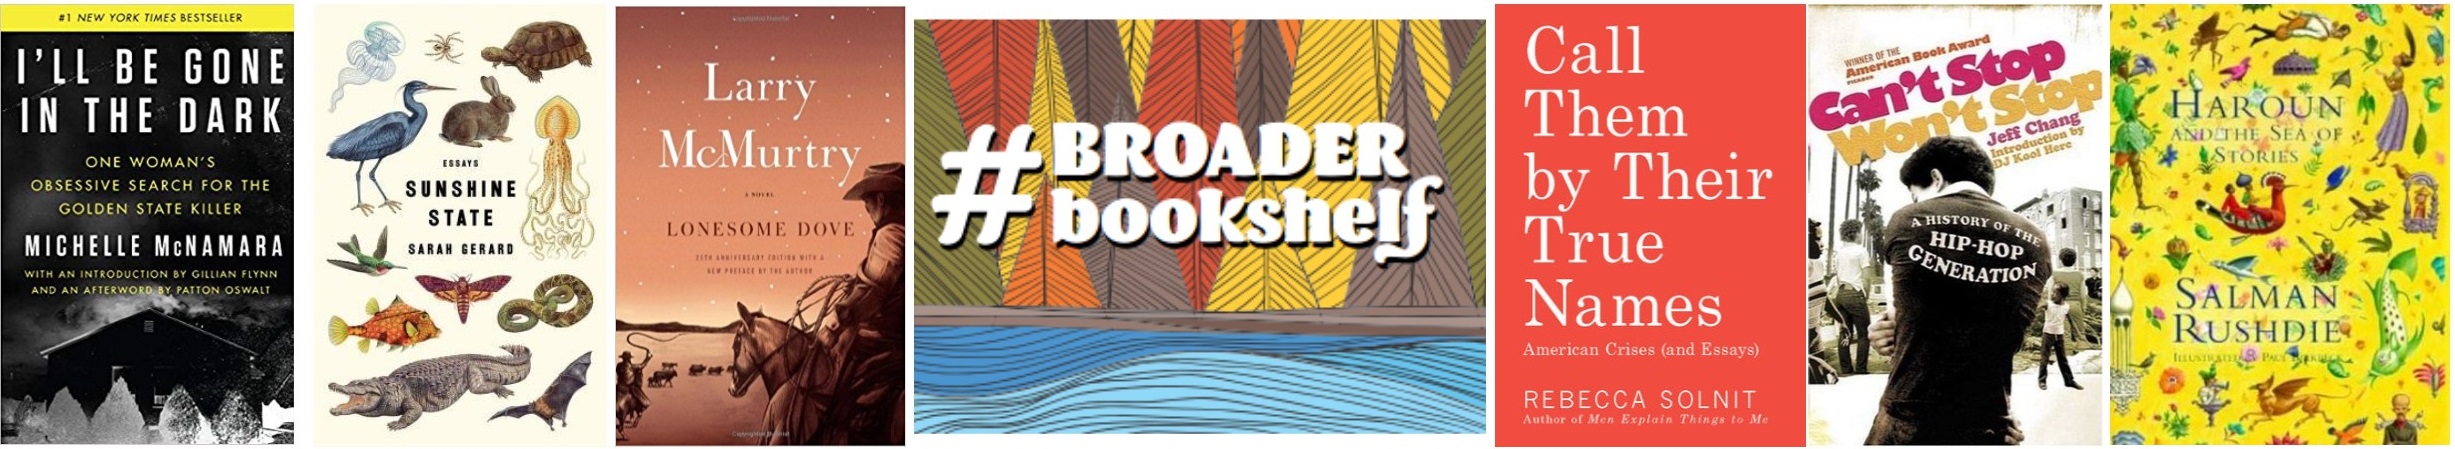 BroaderBookshelf logo and book covers